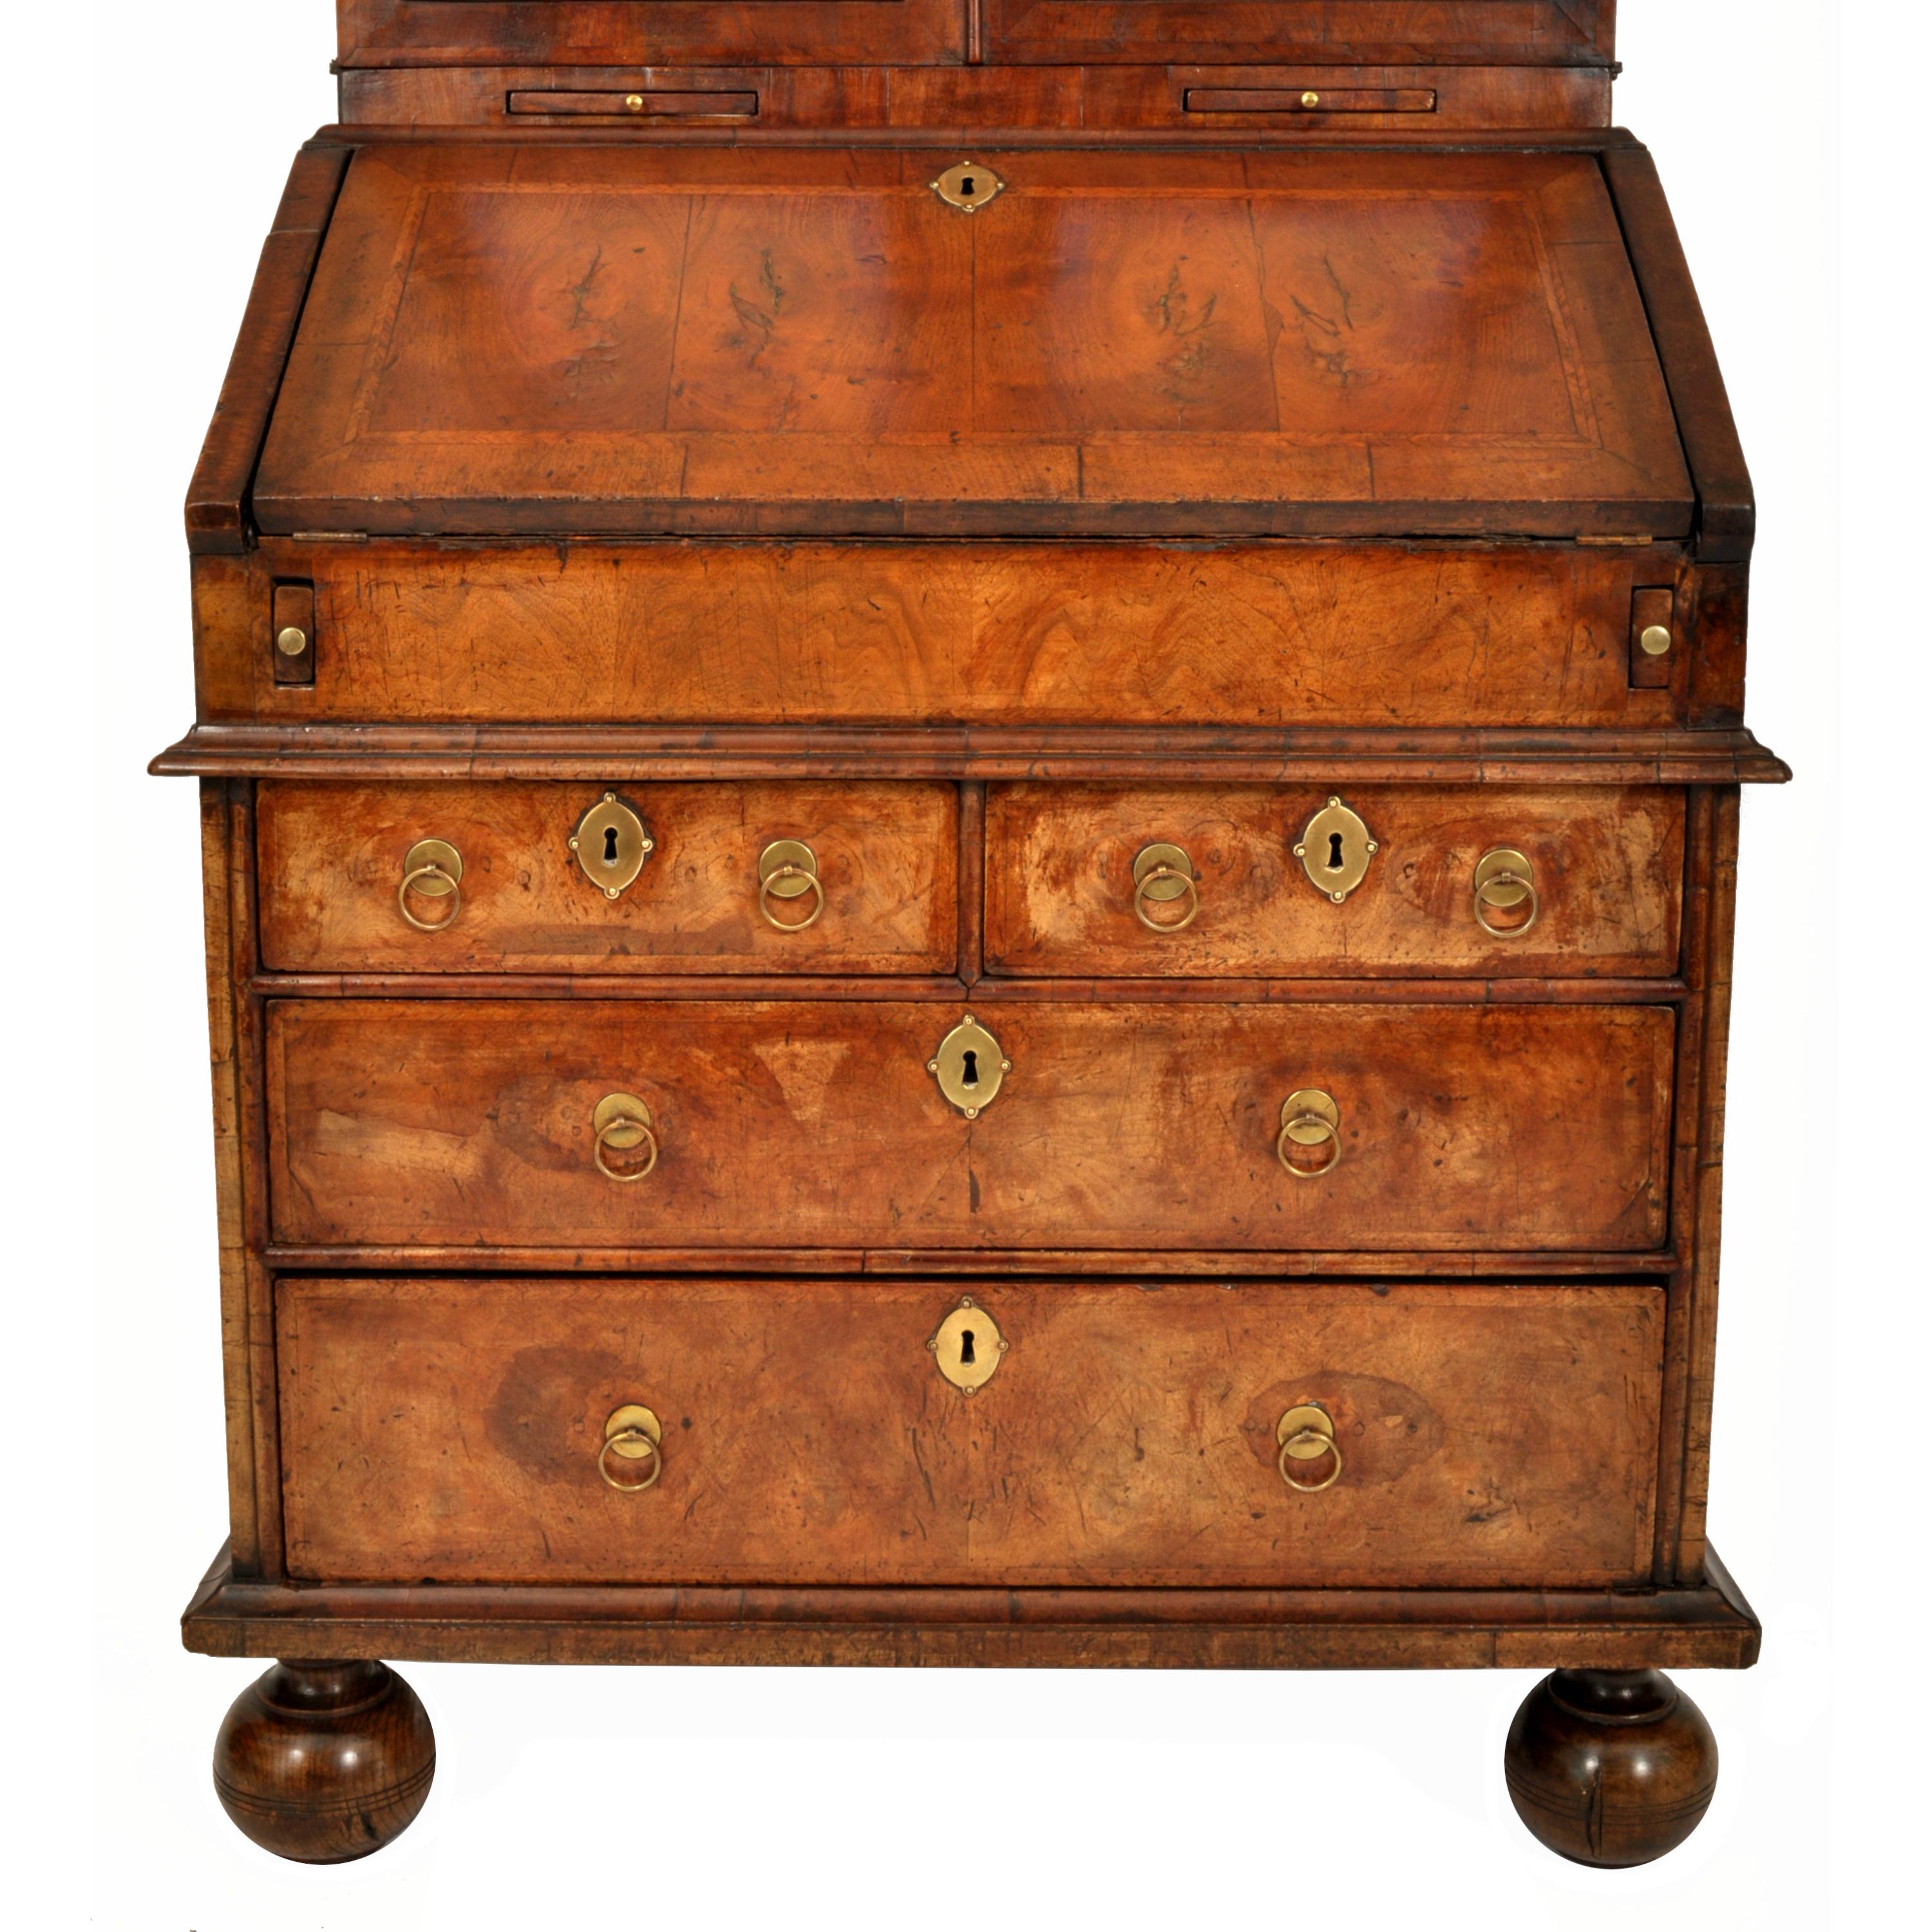 18th Century Antique Queen Anne Period Double Dome Burl Walnut Bureau Bookcase Secretary 1710